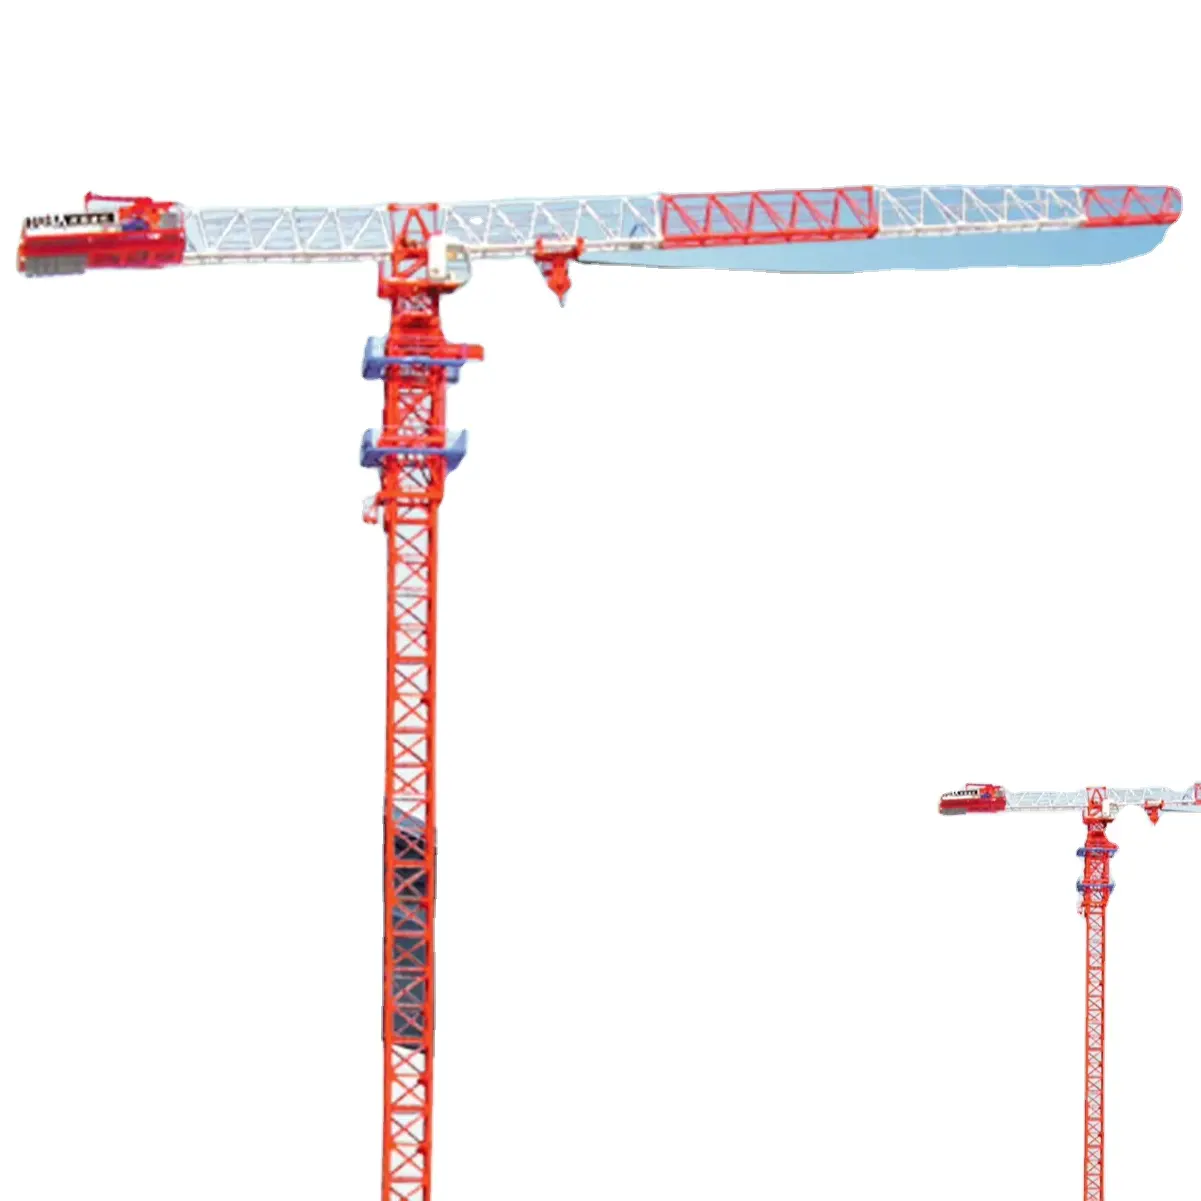 HUBA Flat Top Tower Crane T7025-10 topless tower crane 10ton 70m building construction machine